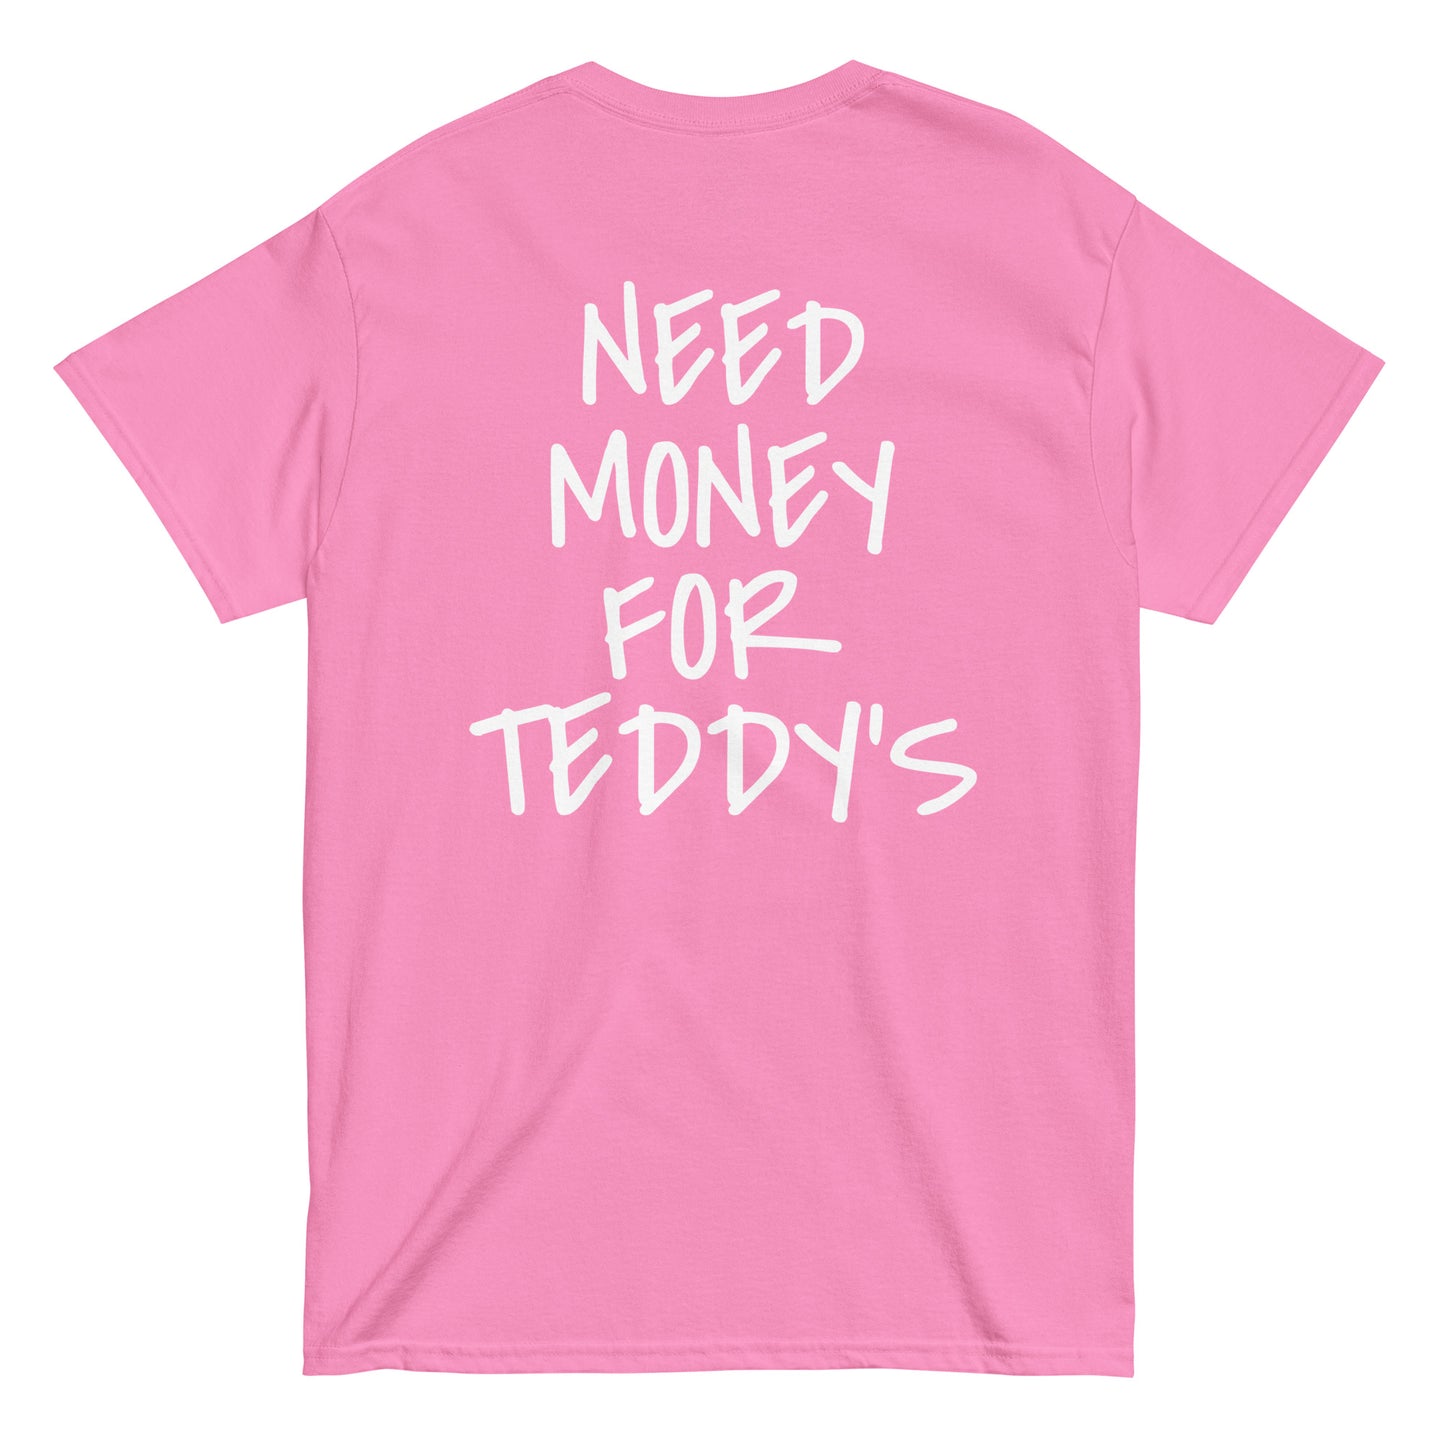 NEED MONEY FOR TEDDY'S T-Shirt [BACKPRINT]